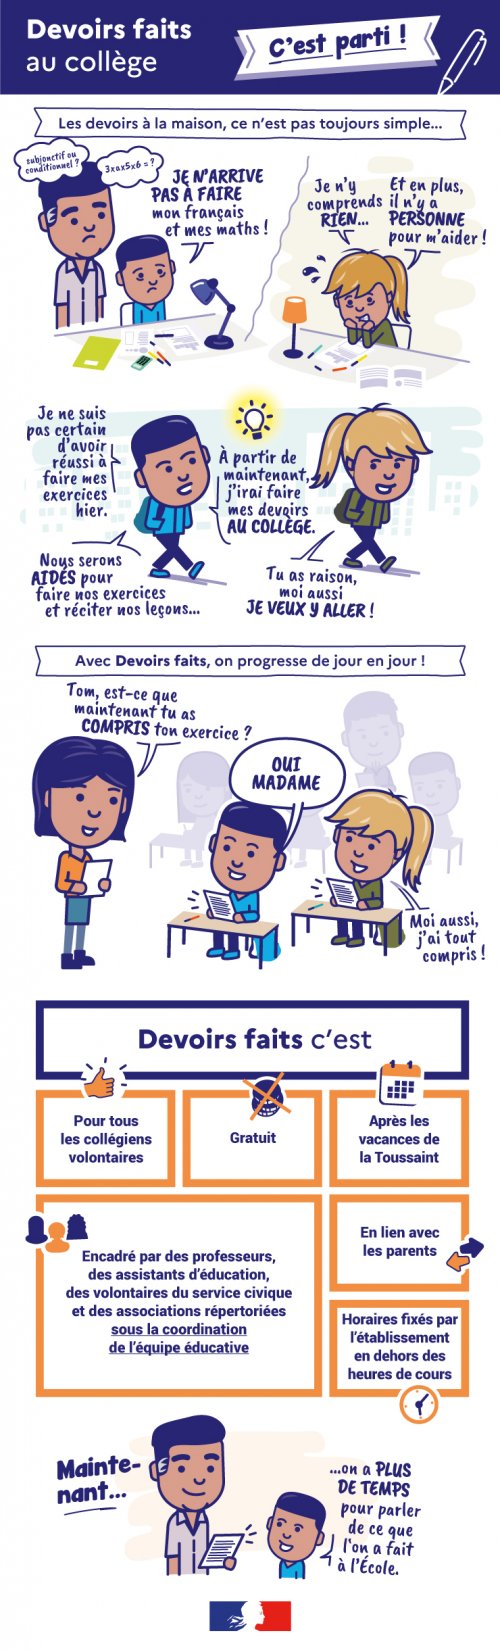 infographie---devoirs-faits-au-coll-ge--70566